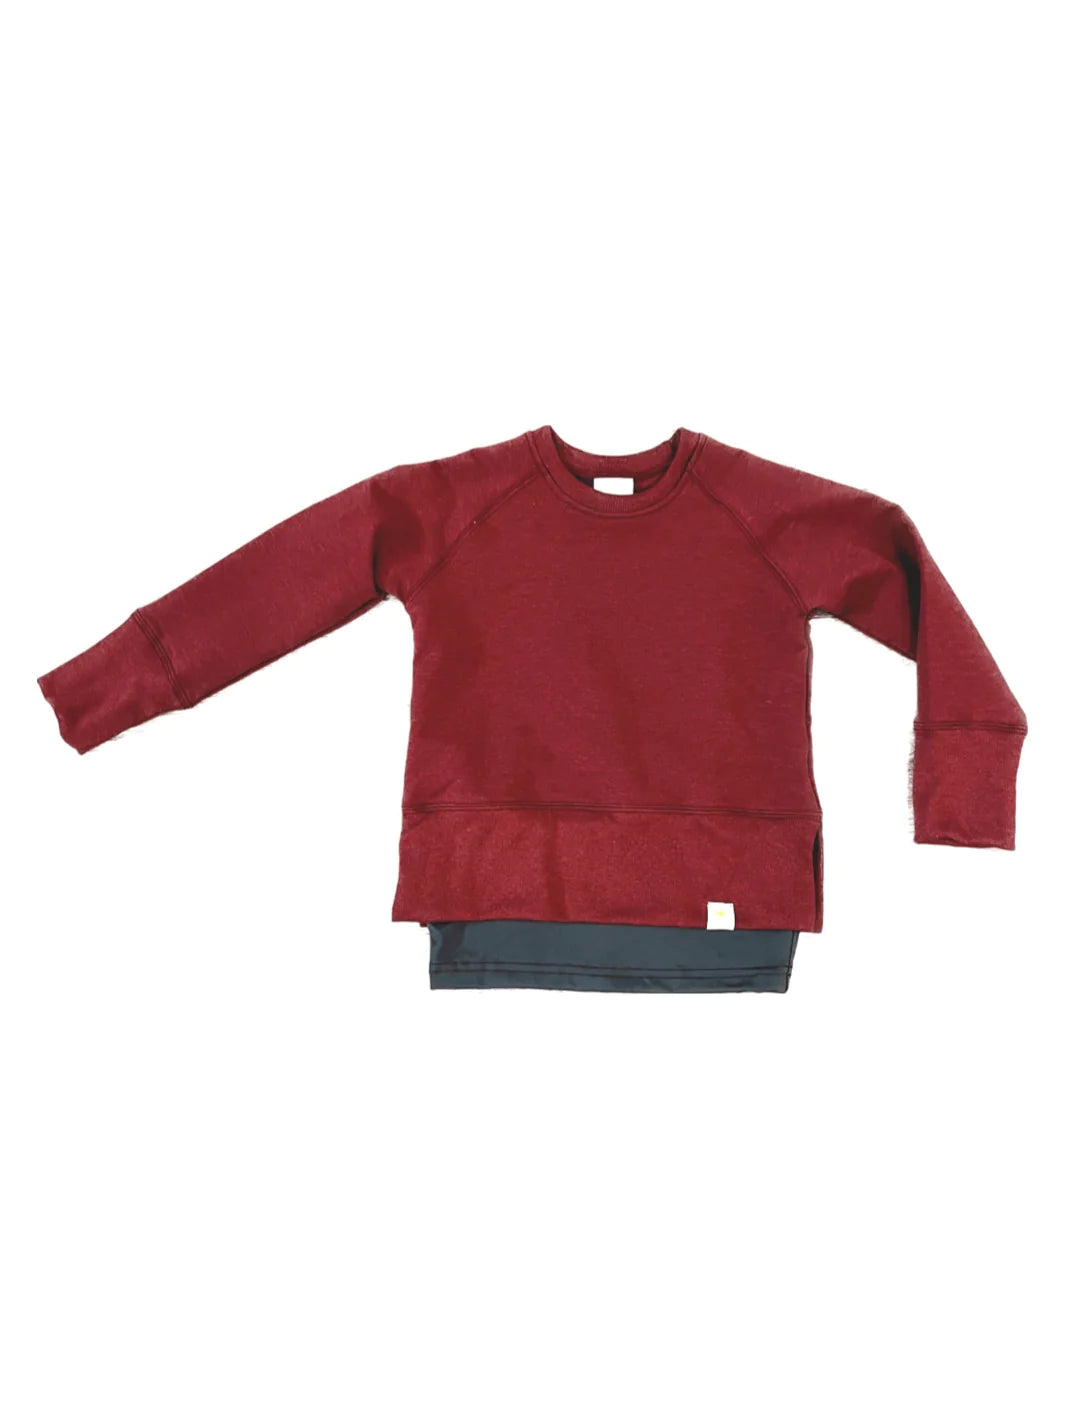 Gooseberry Crewneck Sweater